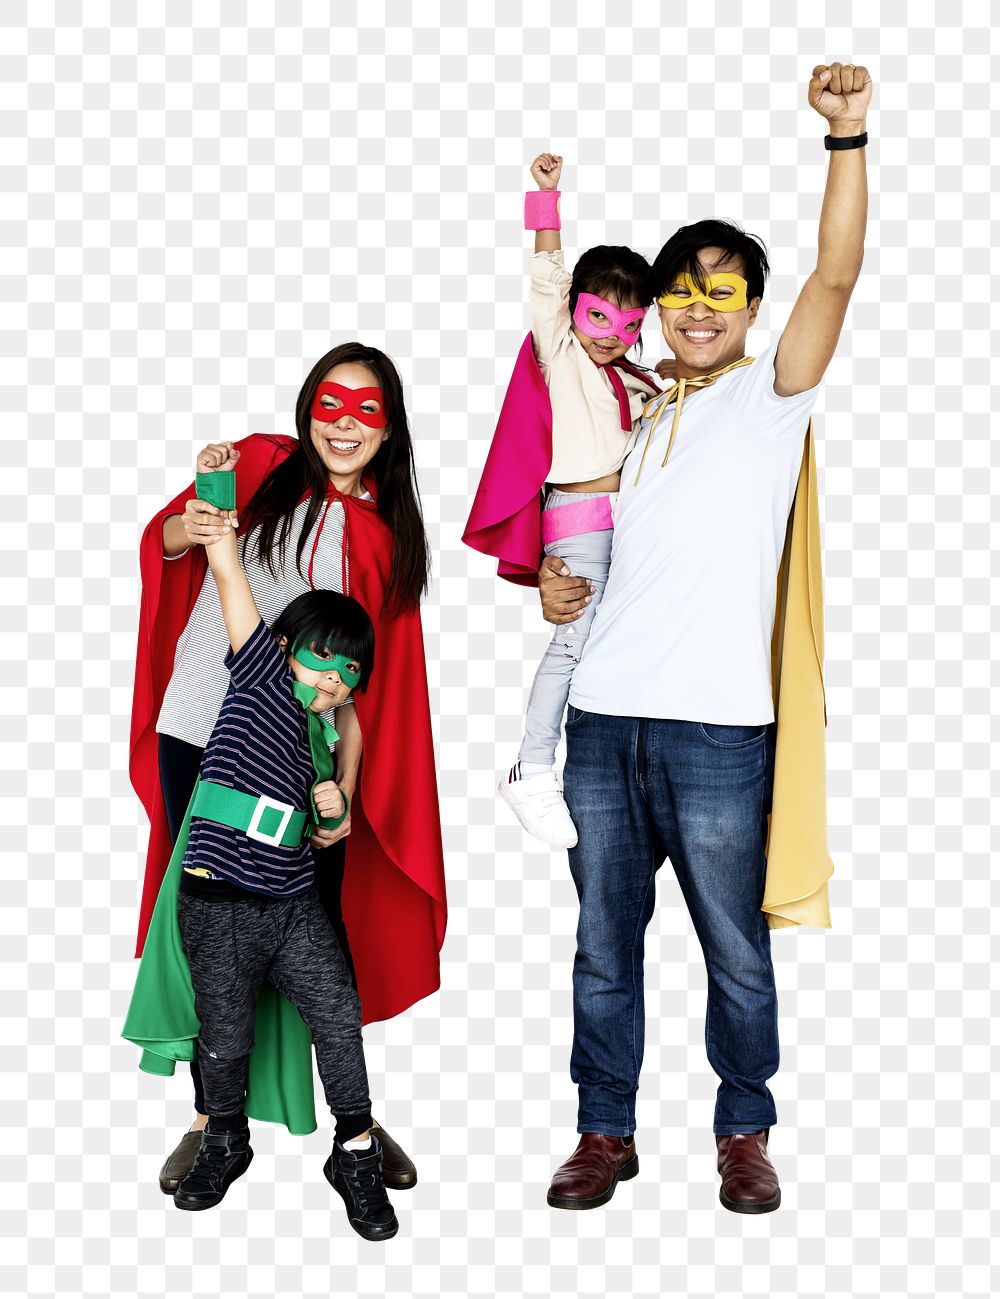 Superhero family png element, transparent background